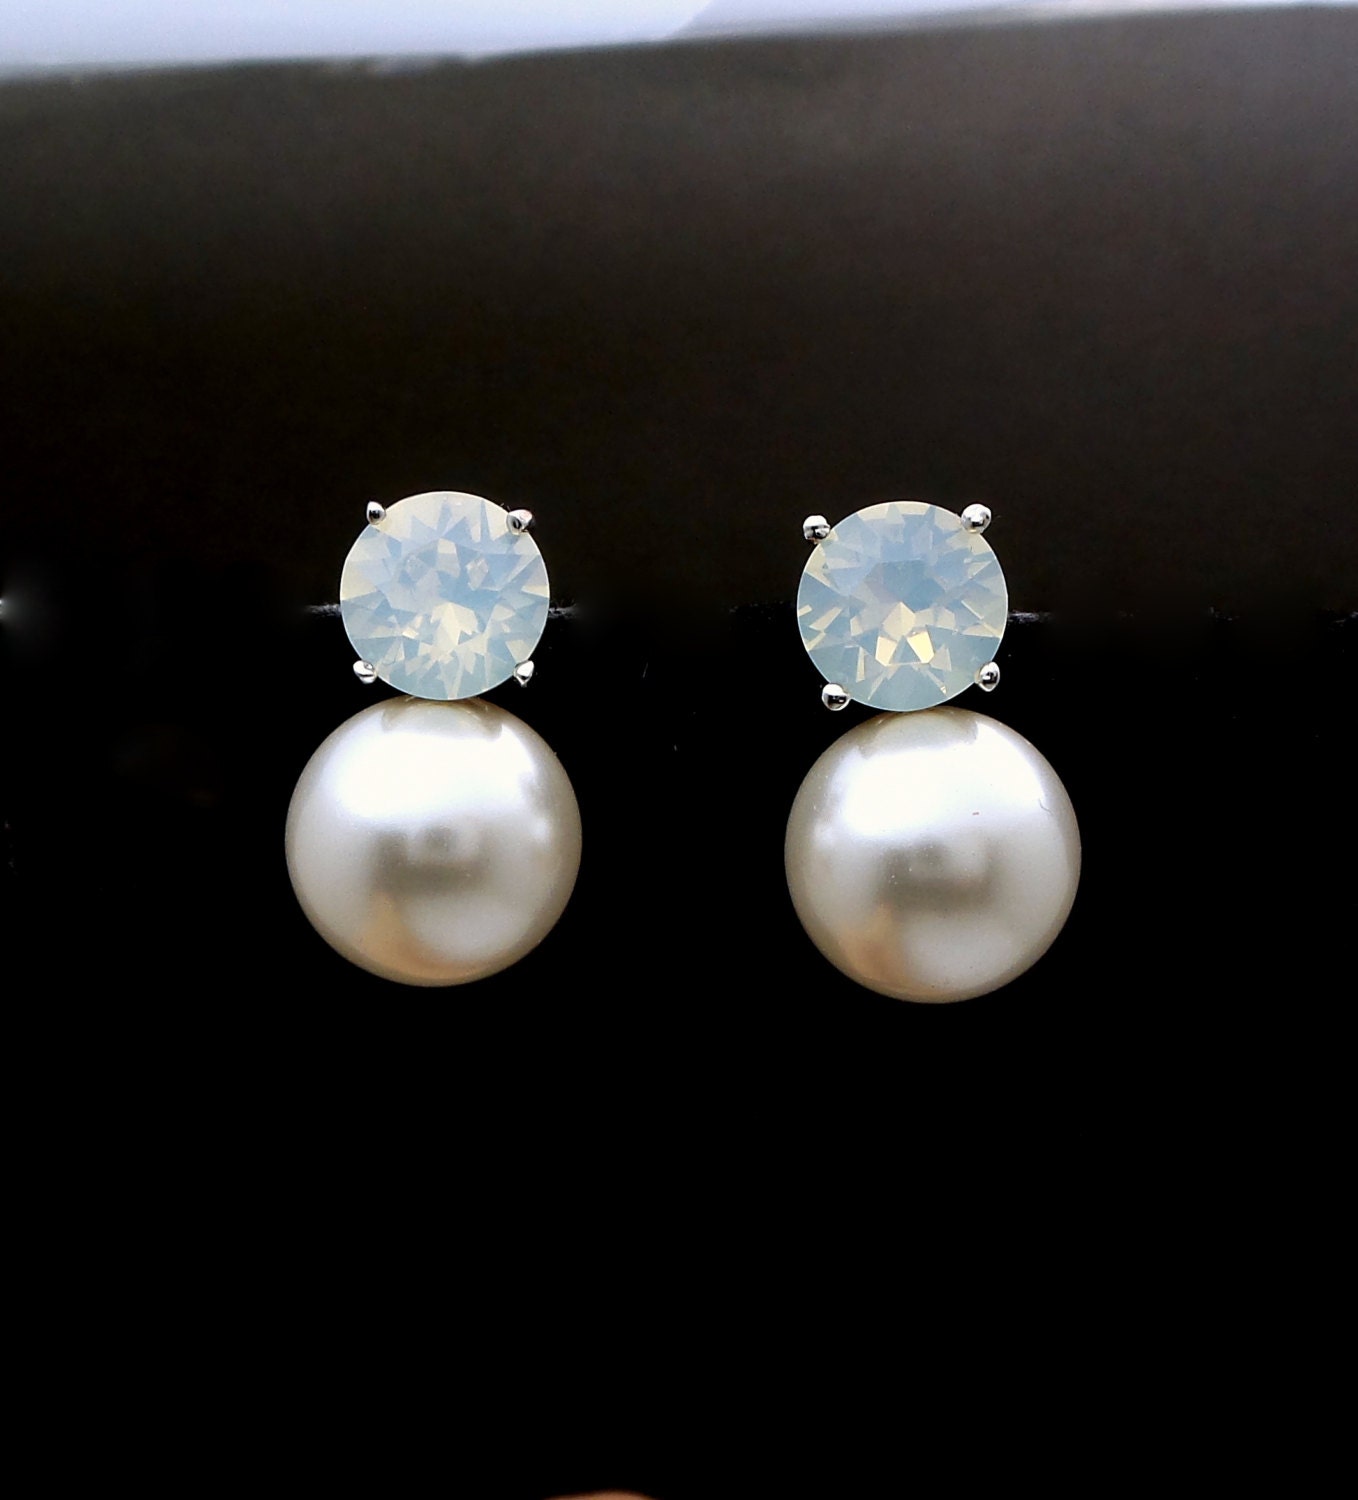 Bridal earrings bridesmaid gift wedding jewelry swarovski | Etsy